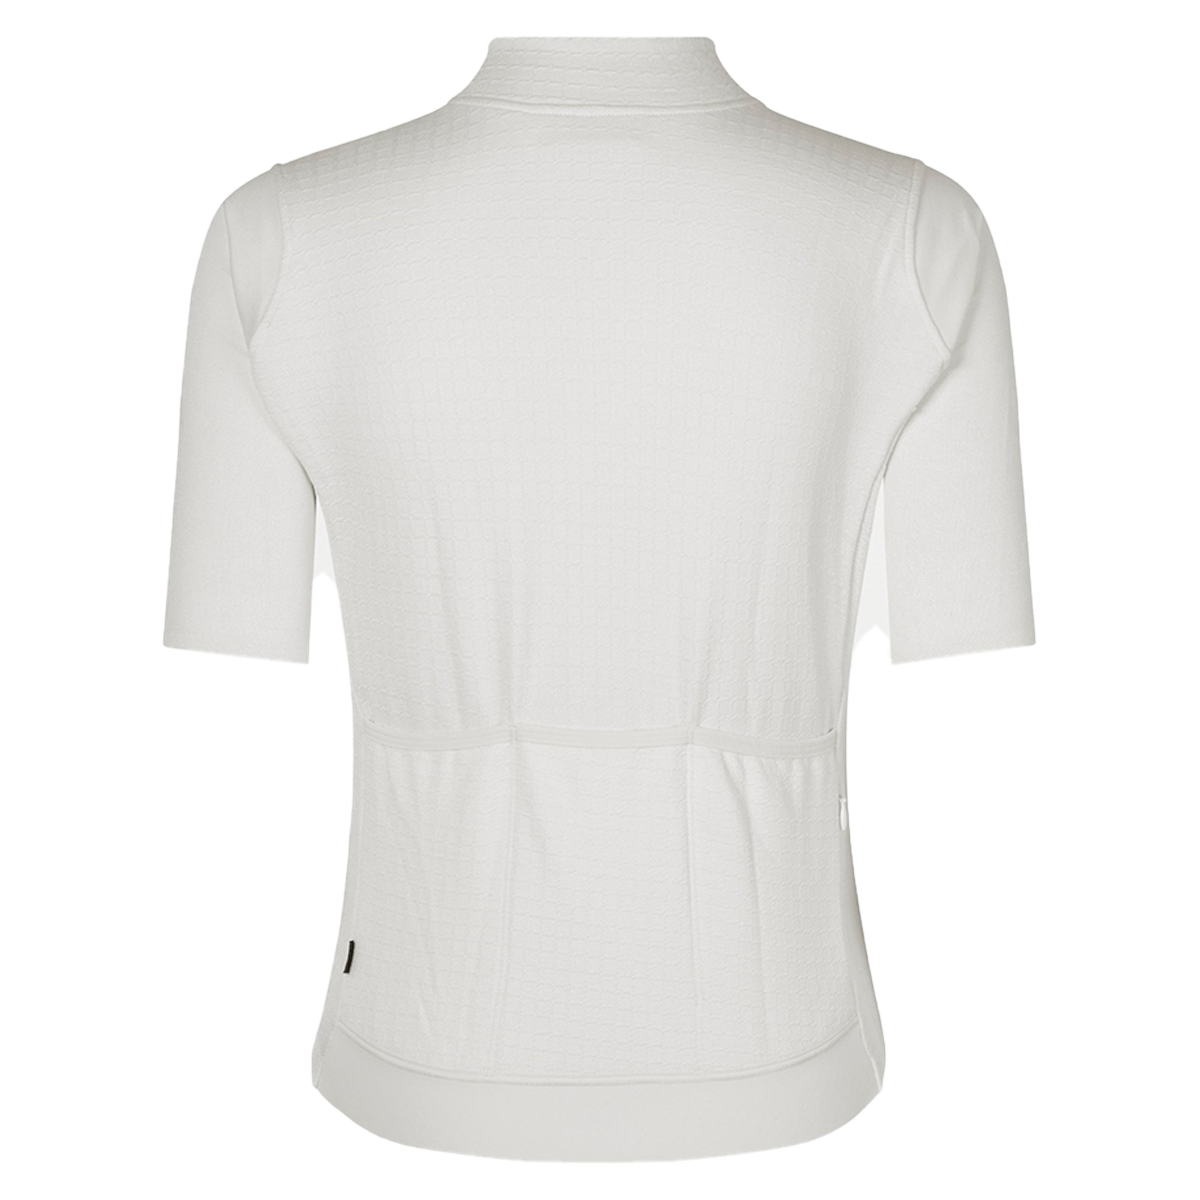 Women's Escapism Wool Jersey - Off White